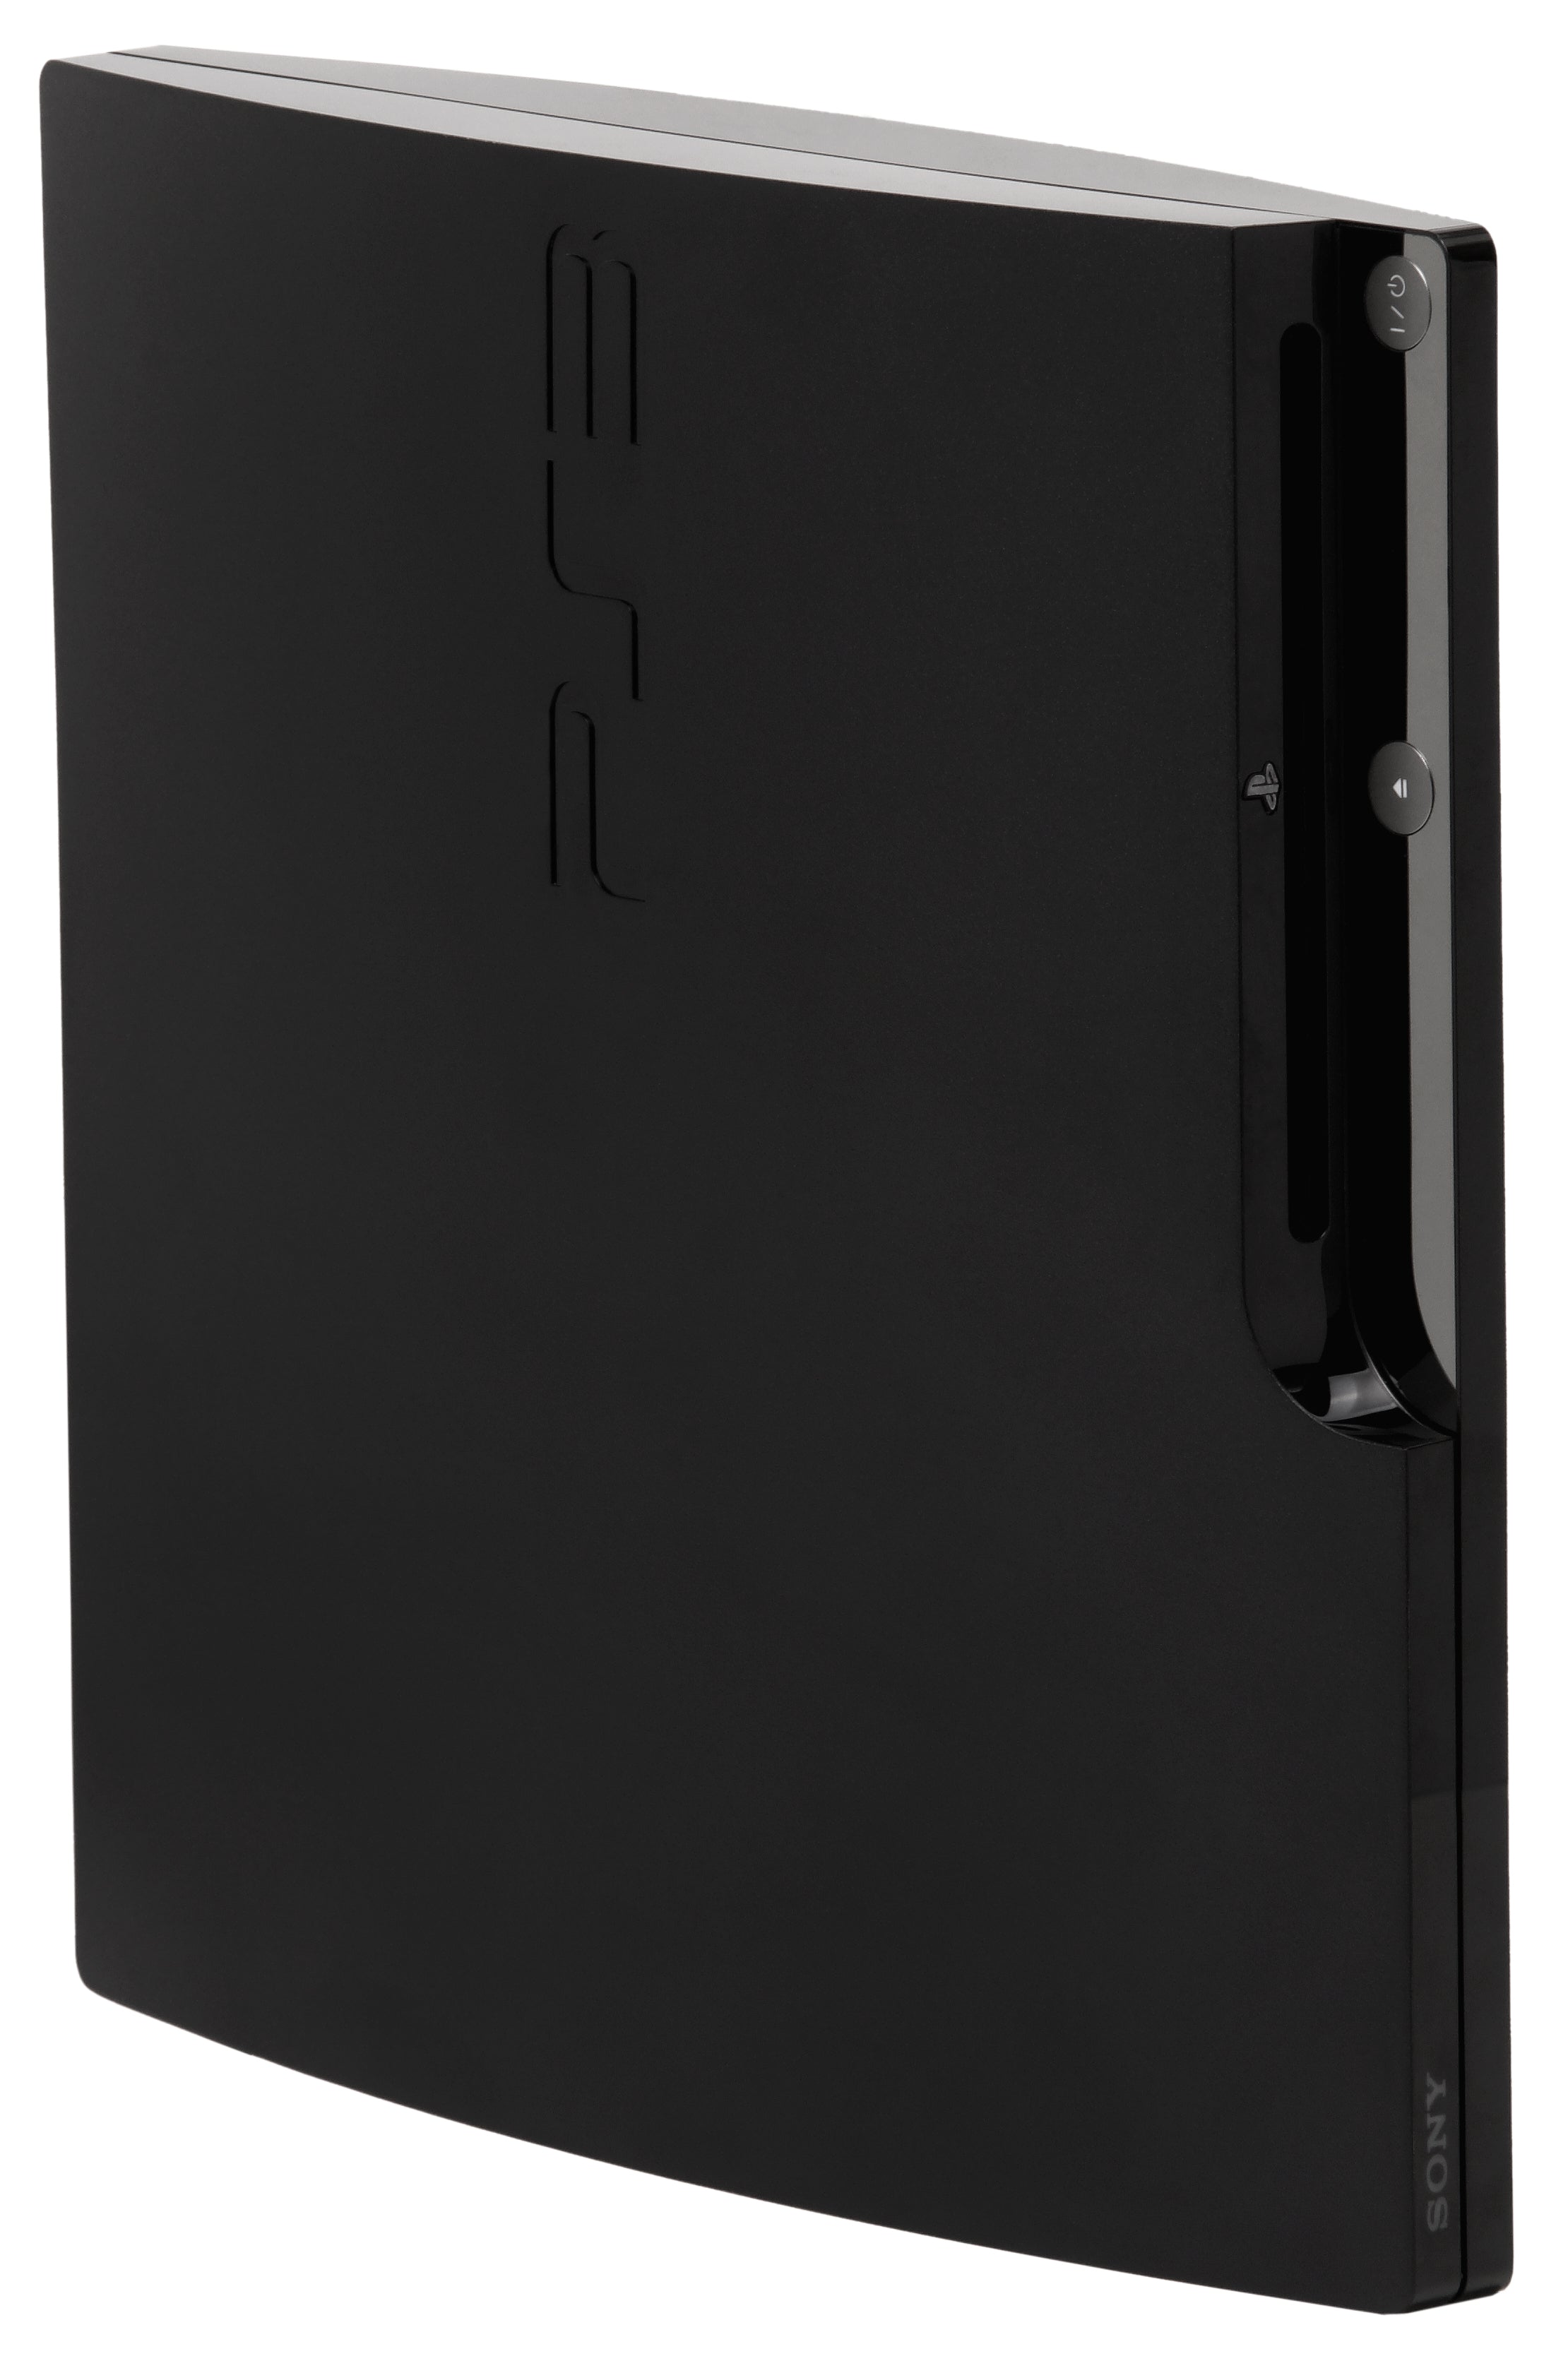 Playstation 3 Slim 120GB Console - Charcoal Black 2001A 2101A